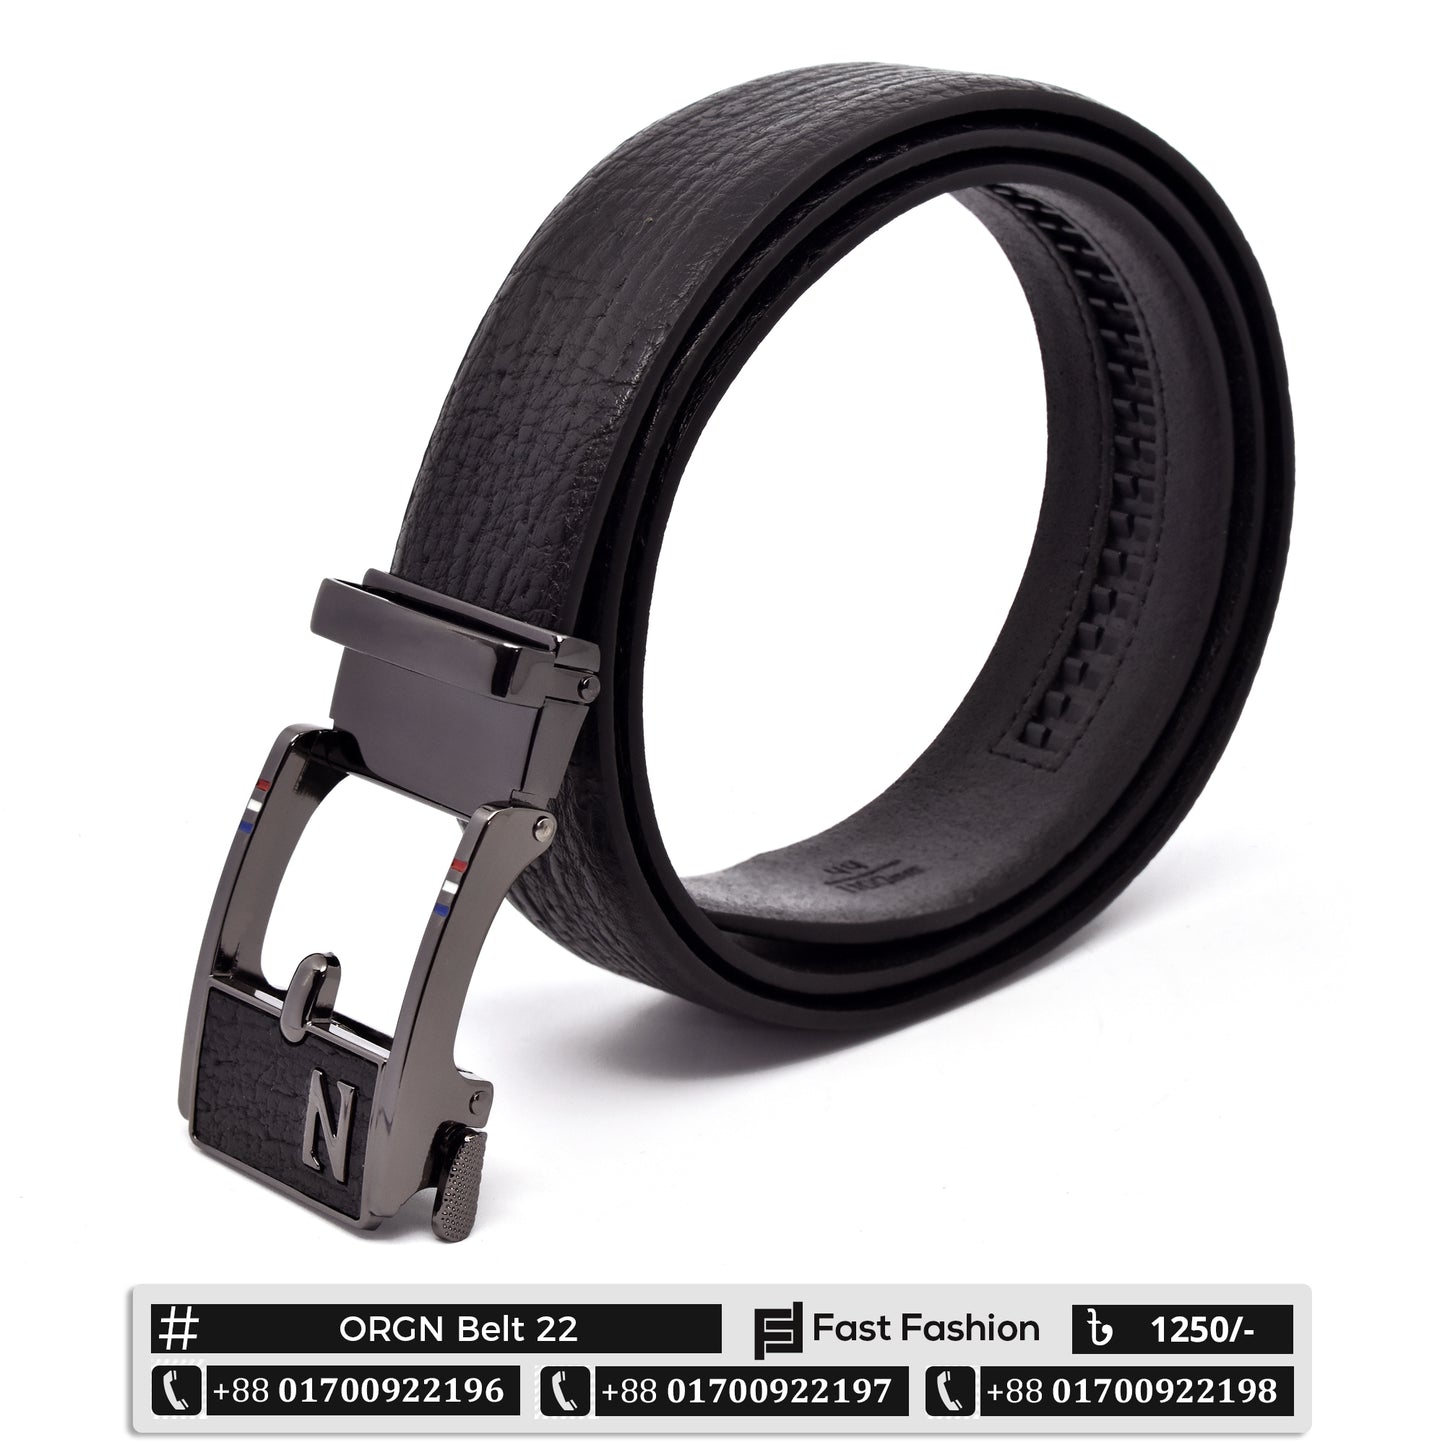 Premium Quality Original Leather Belt - ORGN Belt 22